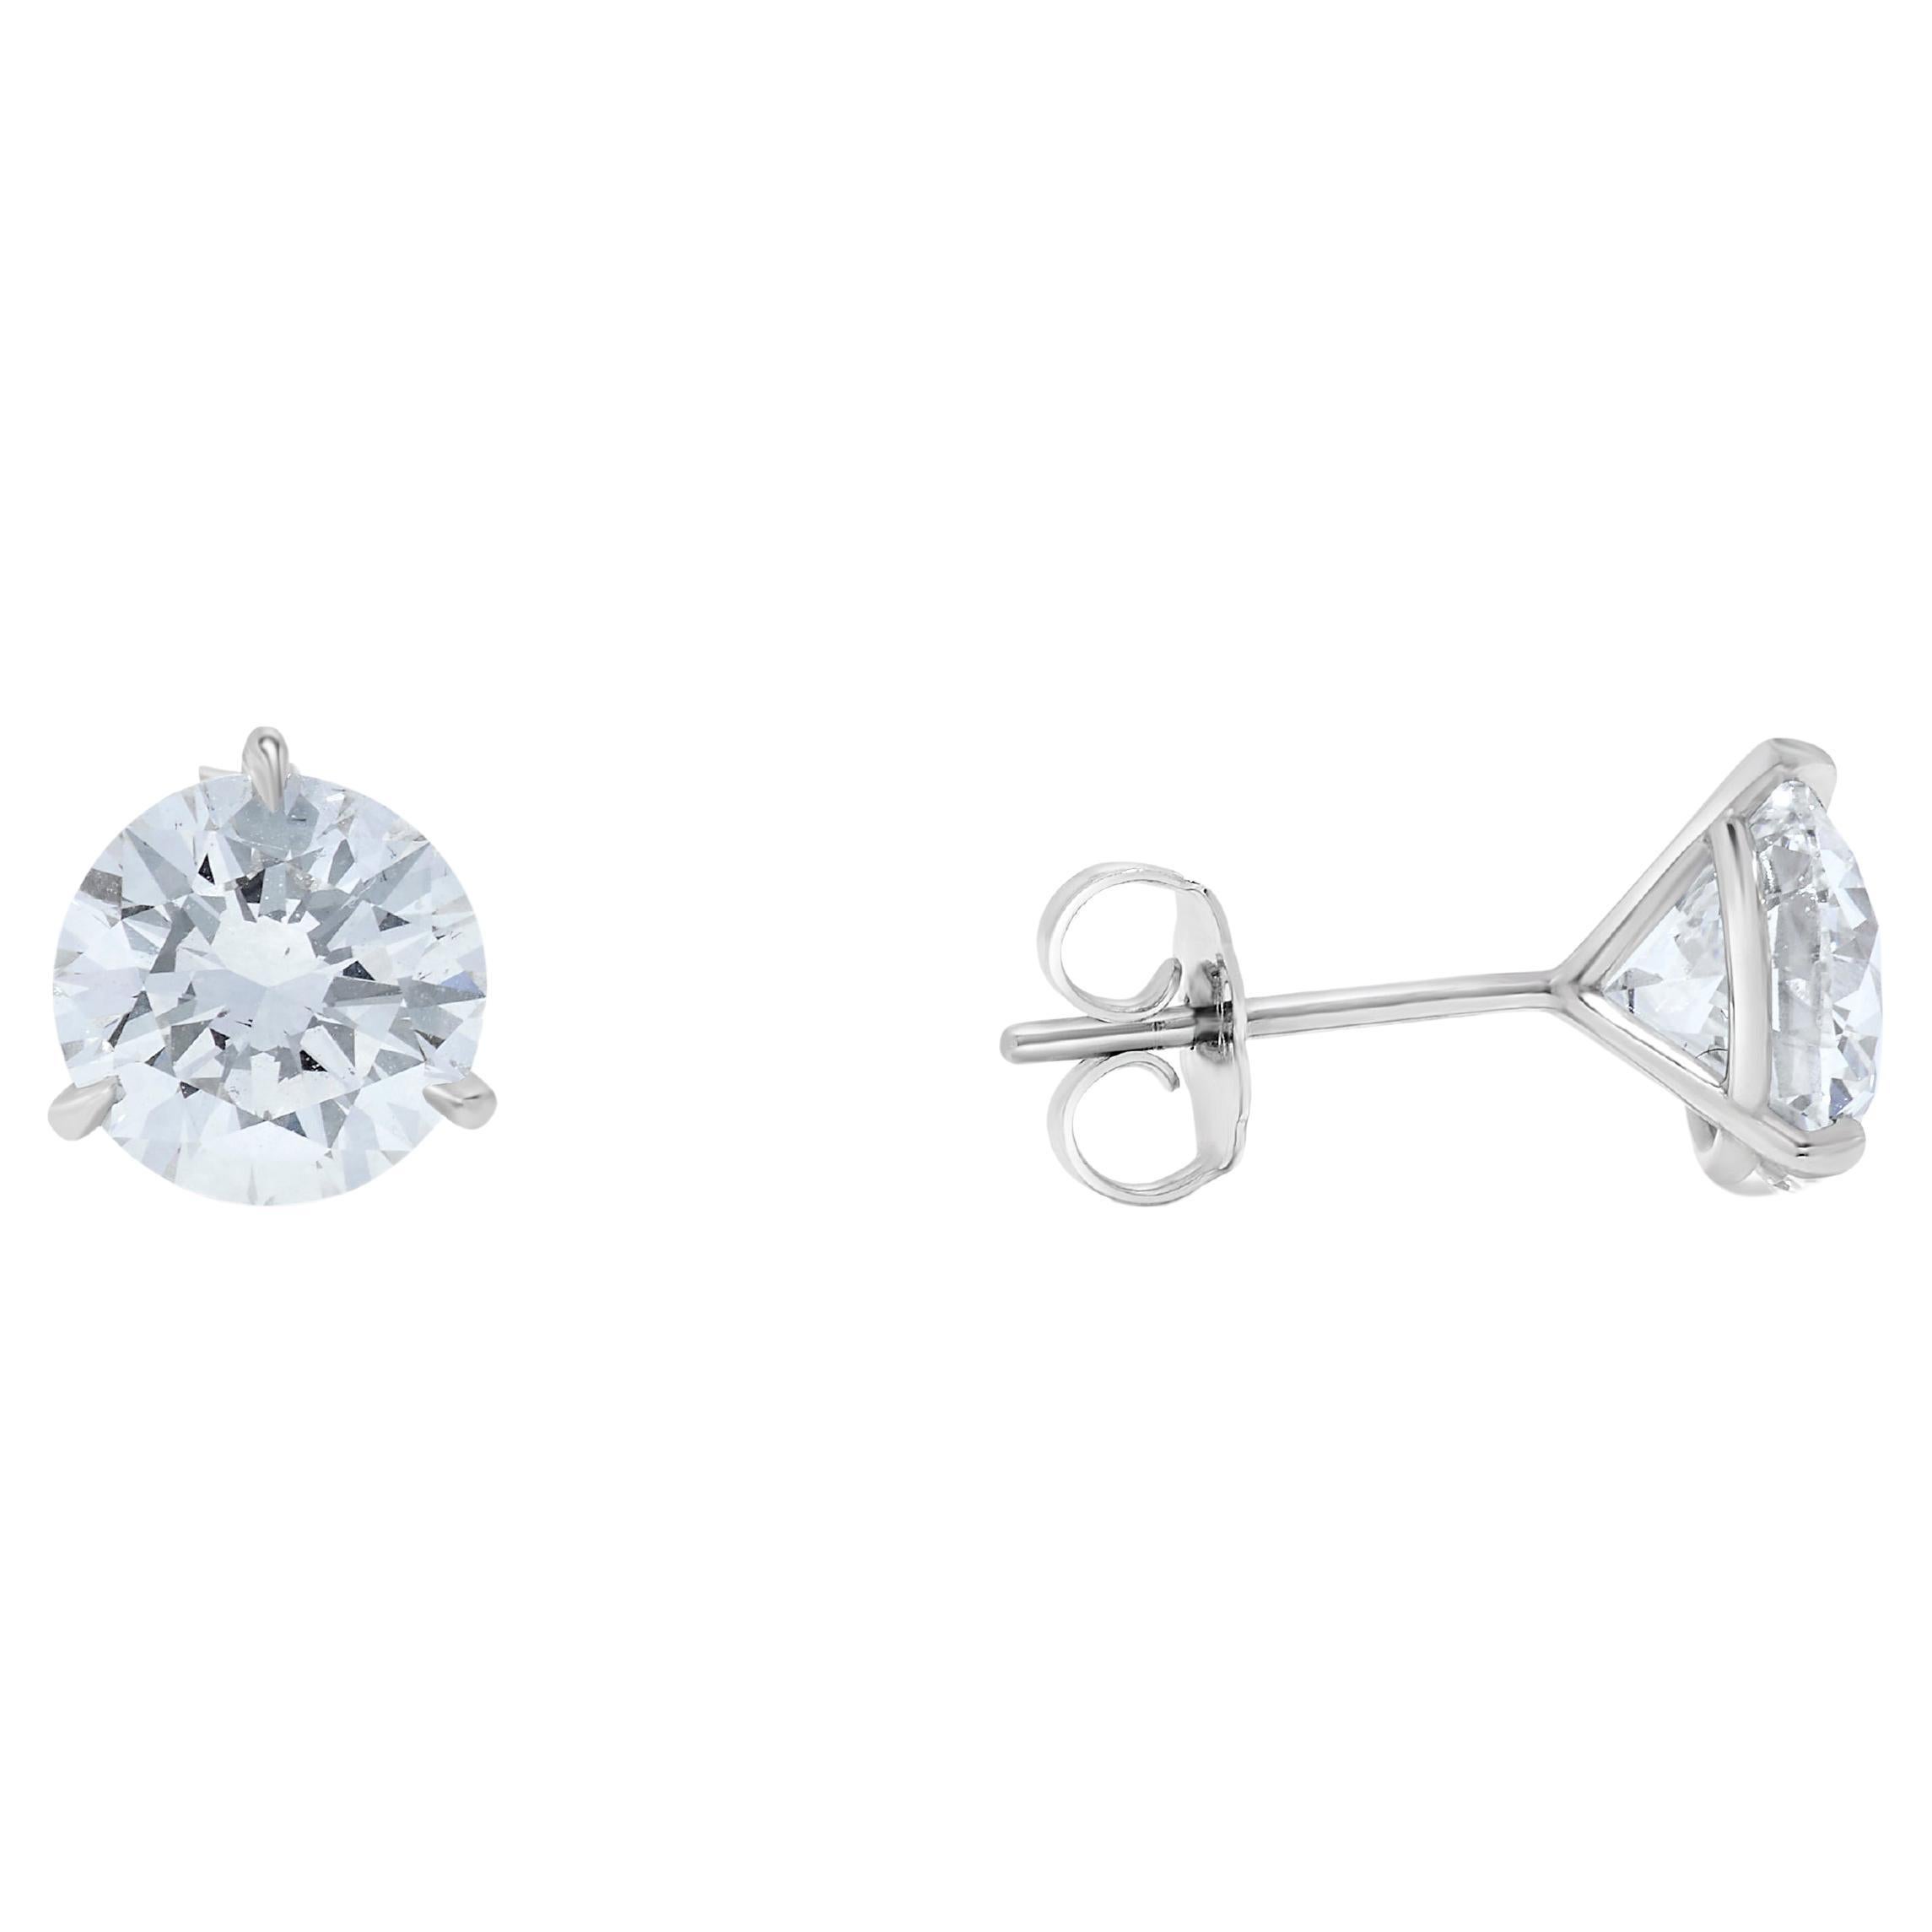 4.04 Carat GIA Certified Diamond Stud Earrings